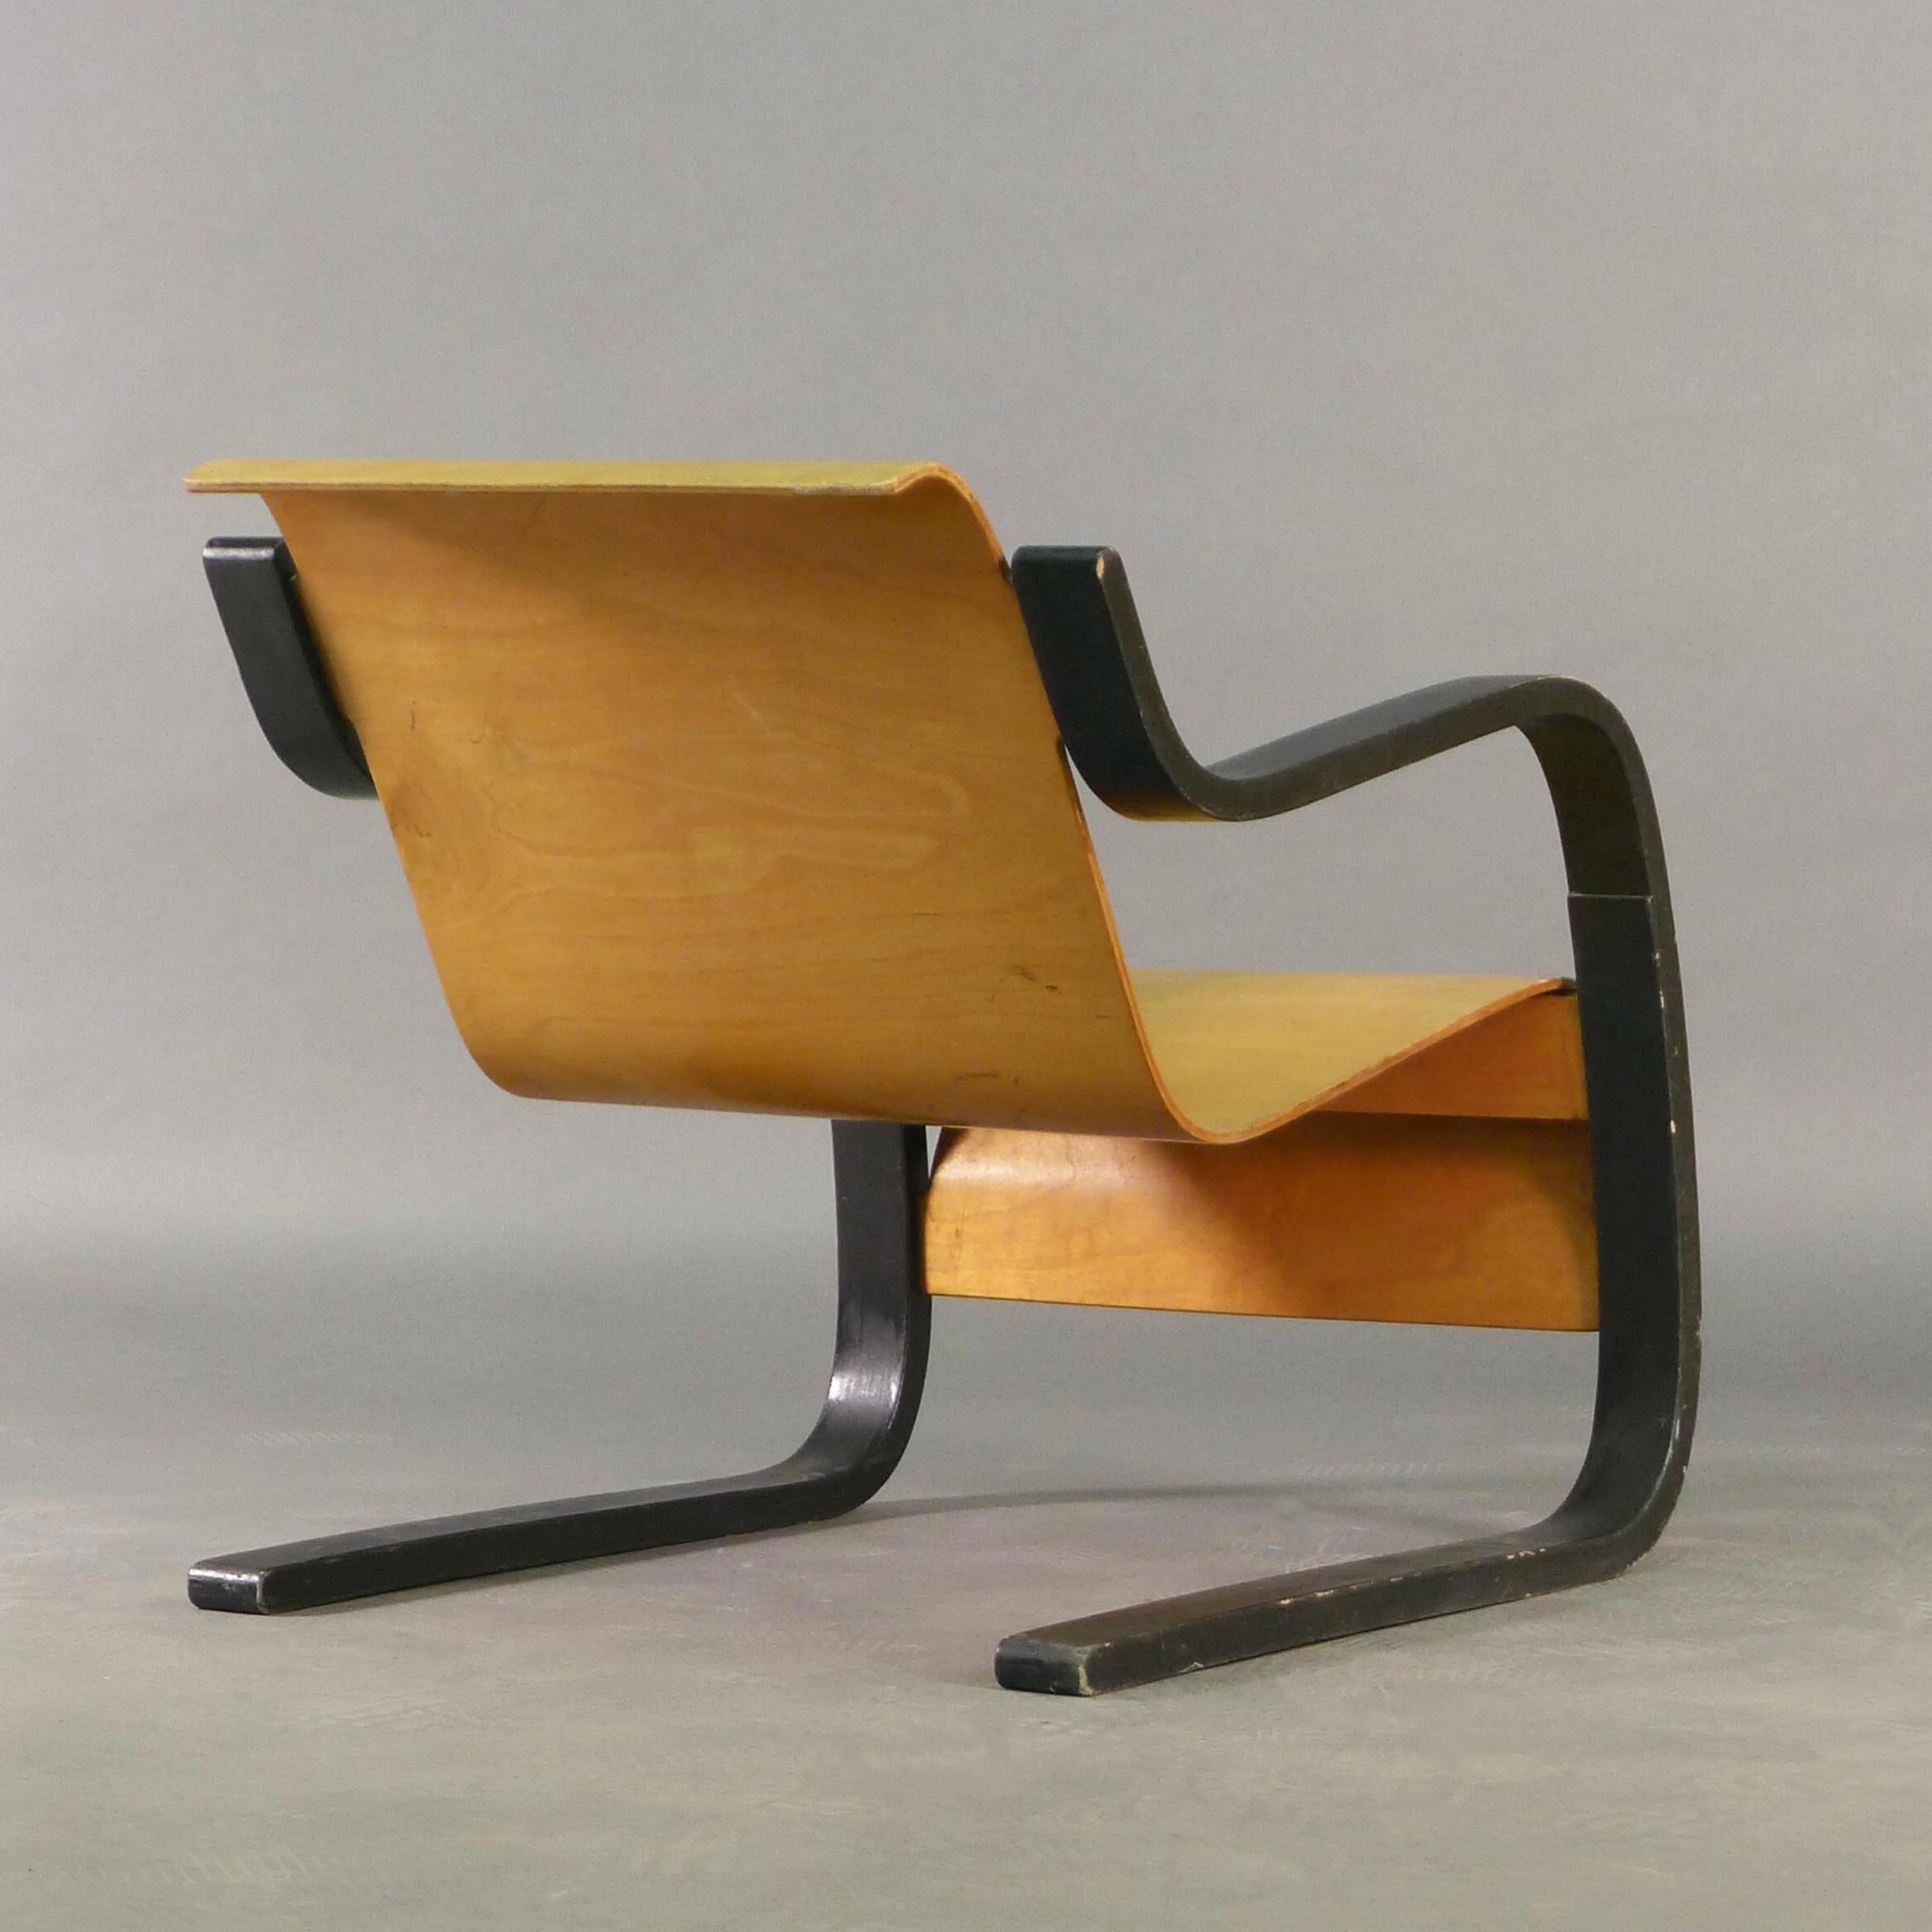 Freitragender Stuhl Alvar Aalto aus Birkenholz und Sperrholz, Modell 31, Huonekalu-ja, Finnland (Finnisch) im Angebot